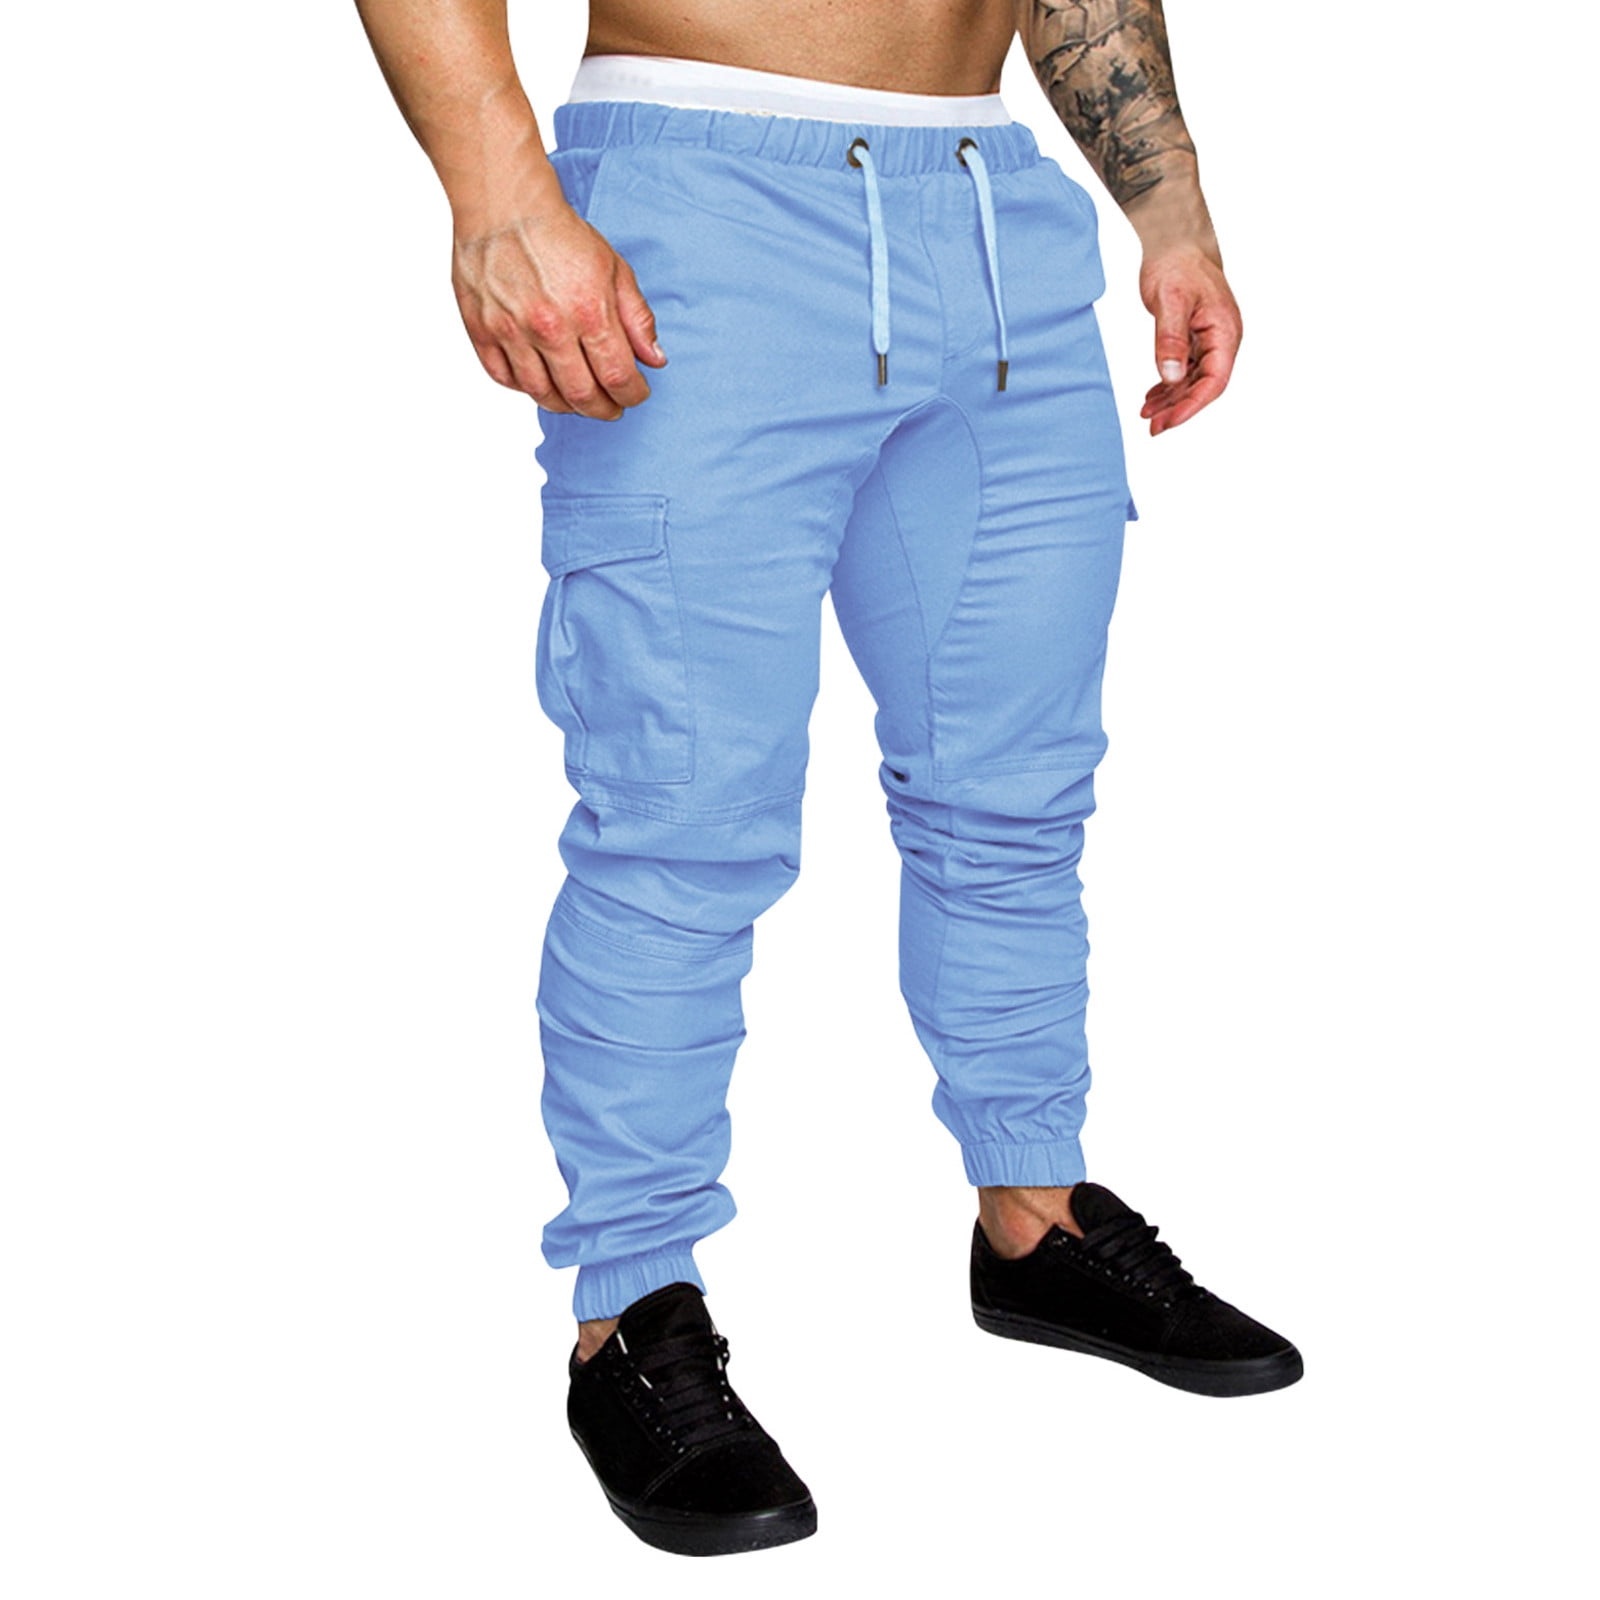 renovere bilag aften KaLI_store Mens Cargo Pants Mens Casual Joggers Pants - Cotton Drawstring  Chino Cargo Pants Hiking Outdoor Twill Track Jogging Sweatpants Pants Light  Blue,M - Walmart.com